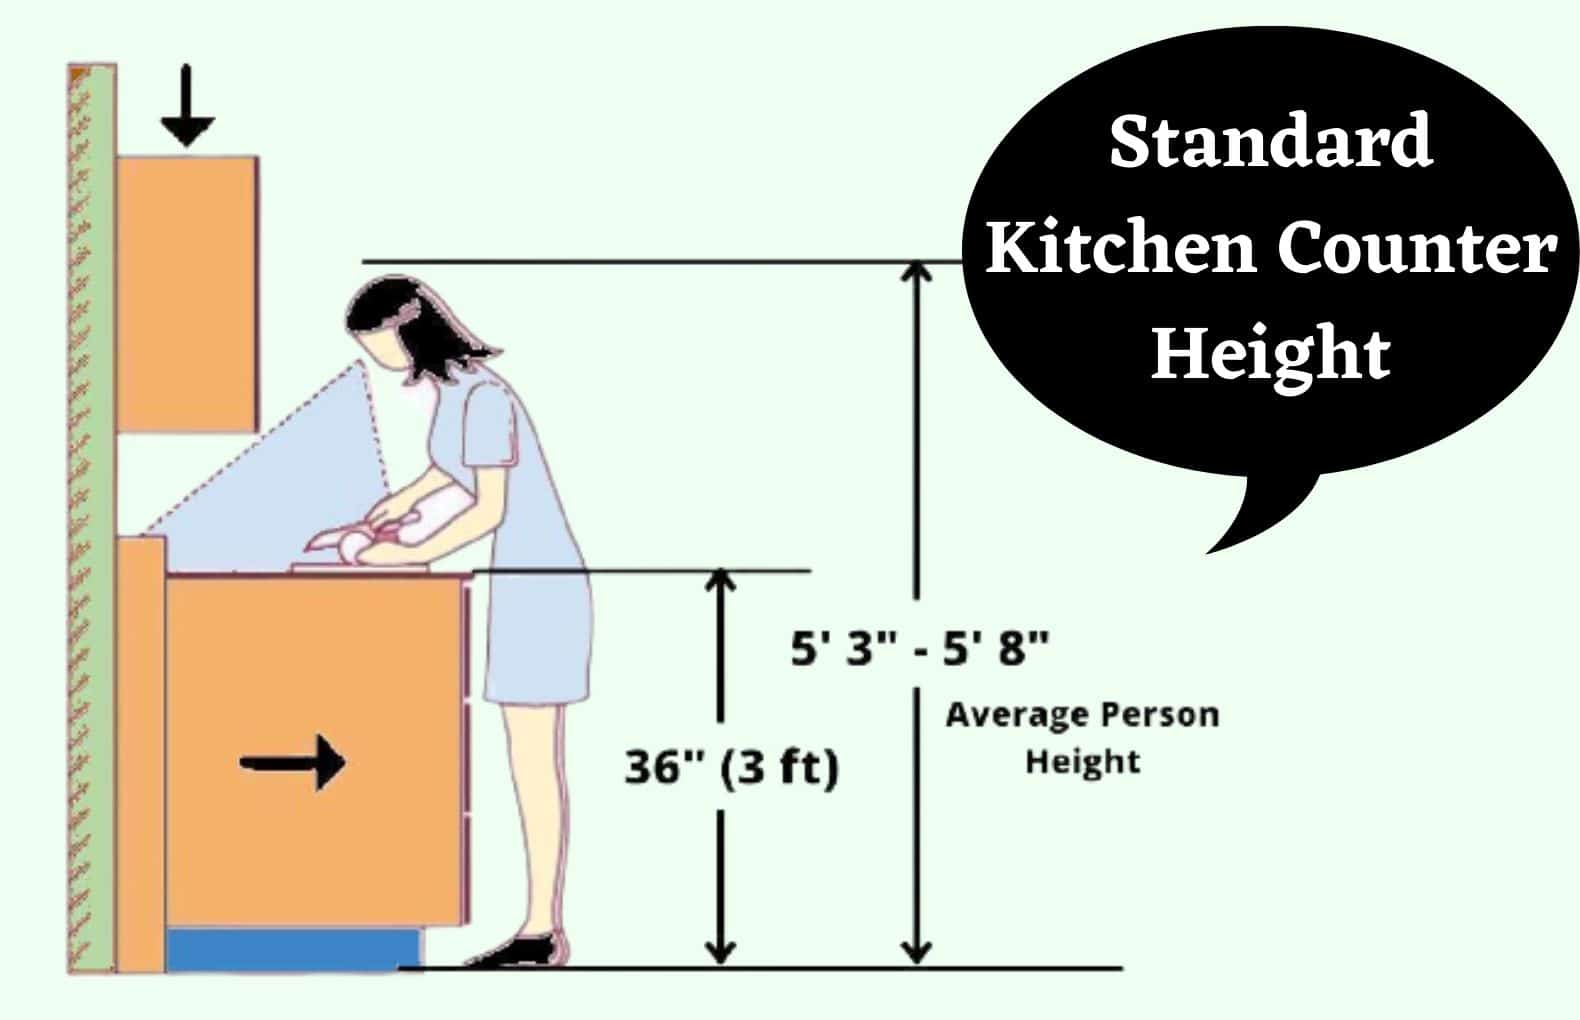 Standard Kitchen Counter Height 1 